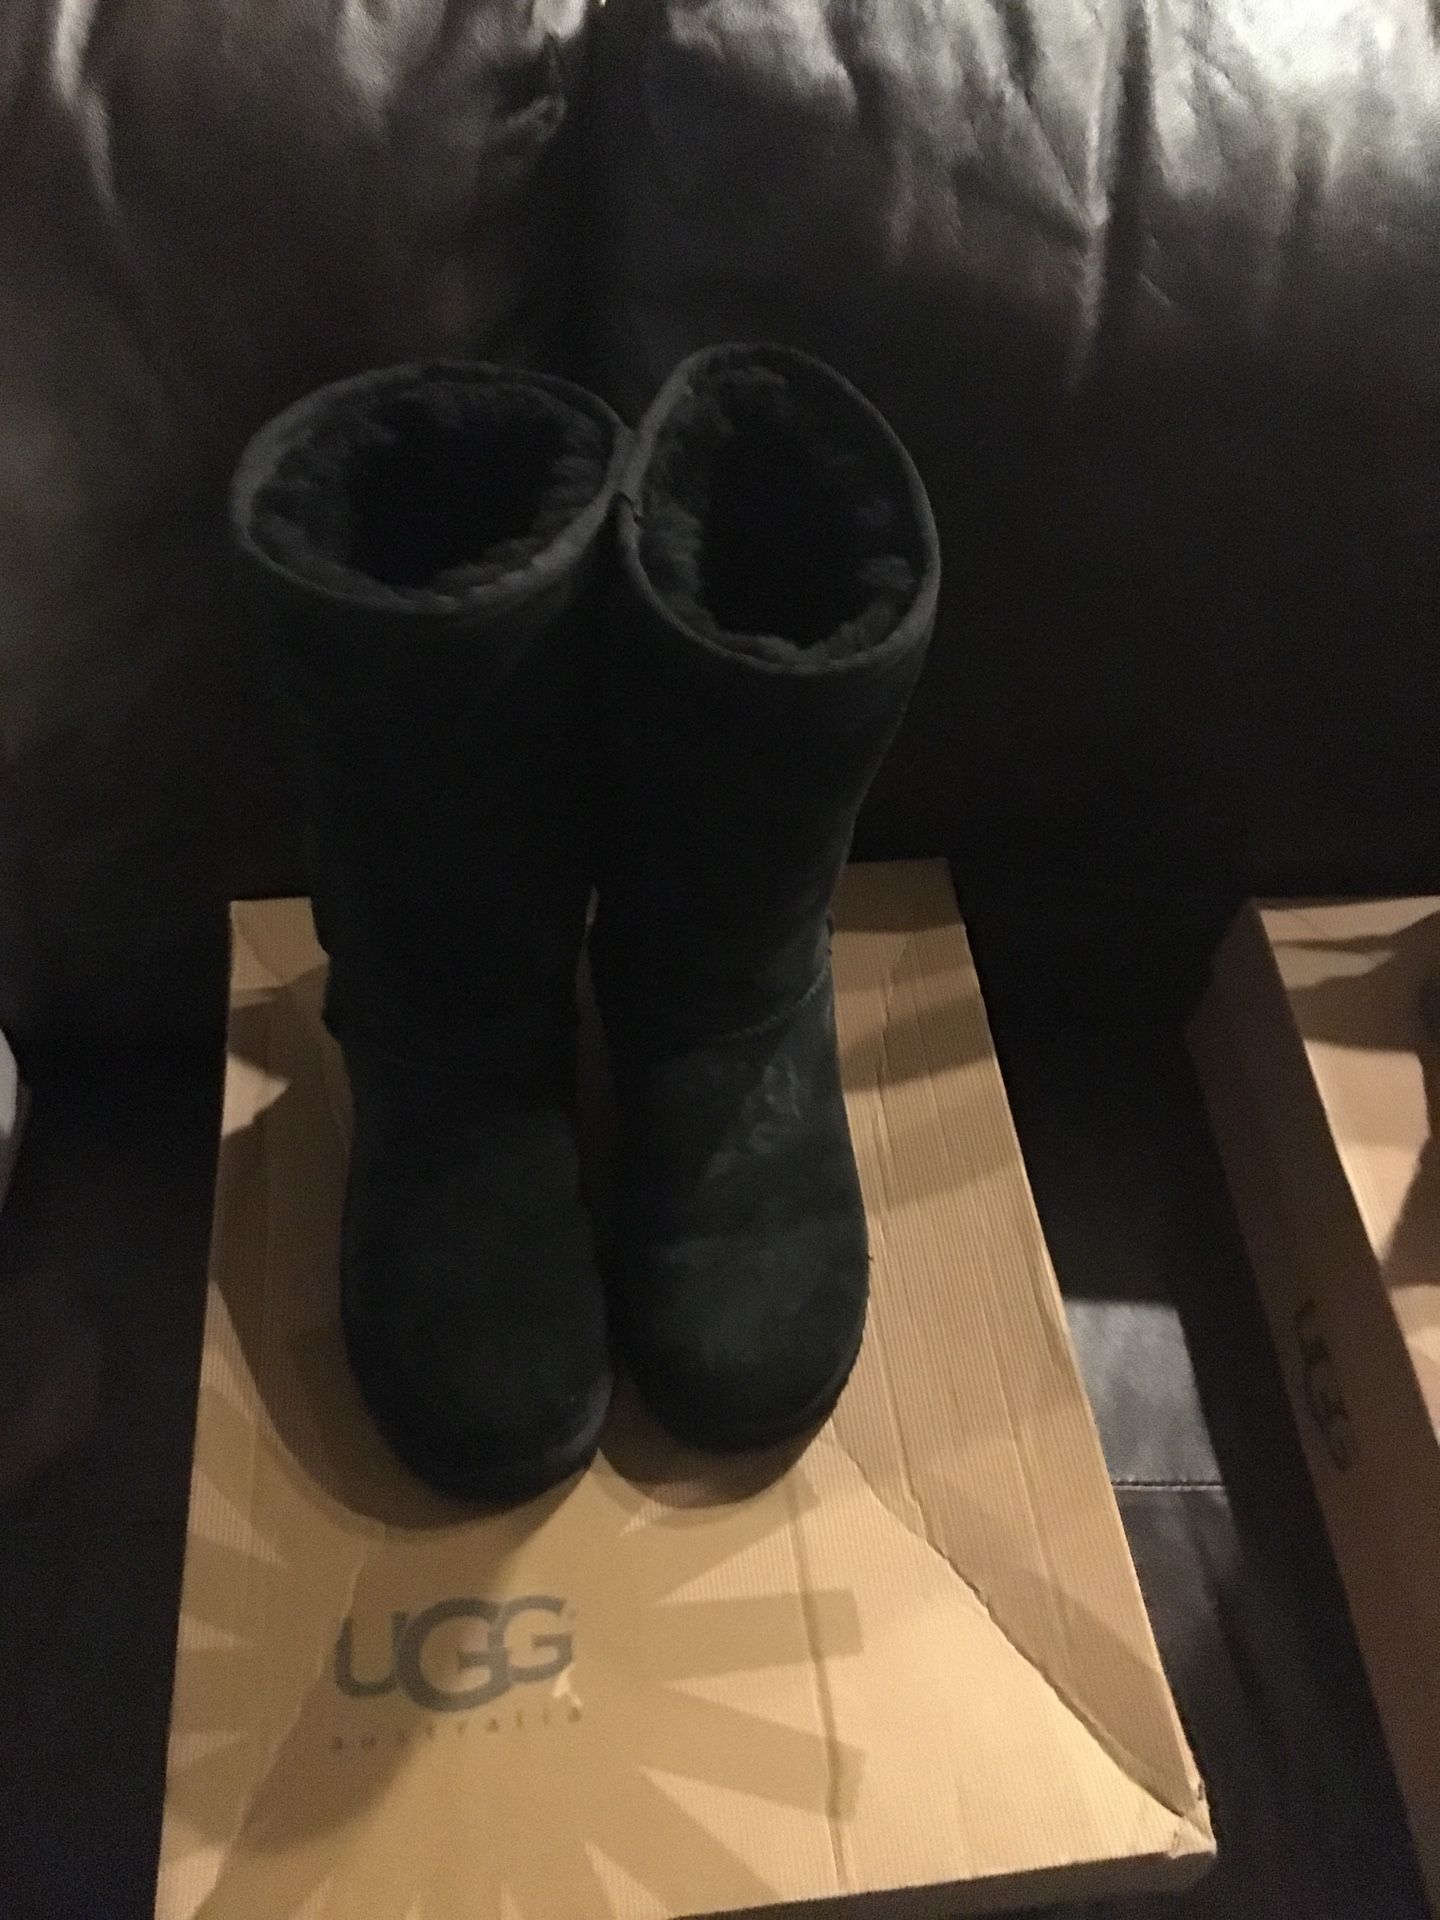 Ugg women’s tall boots-black